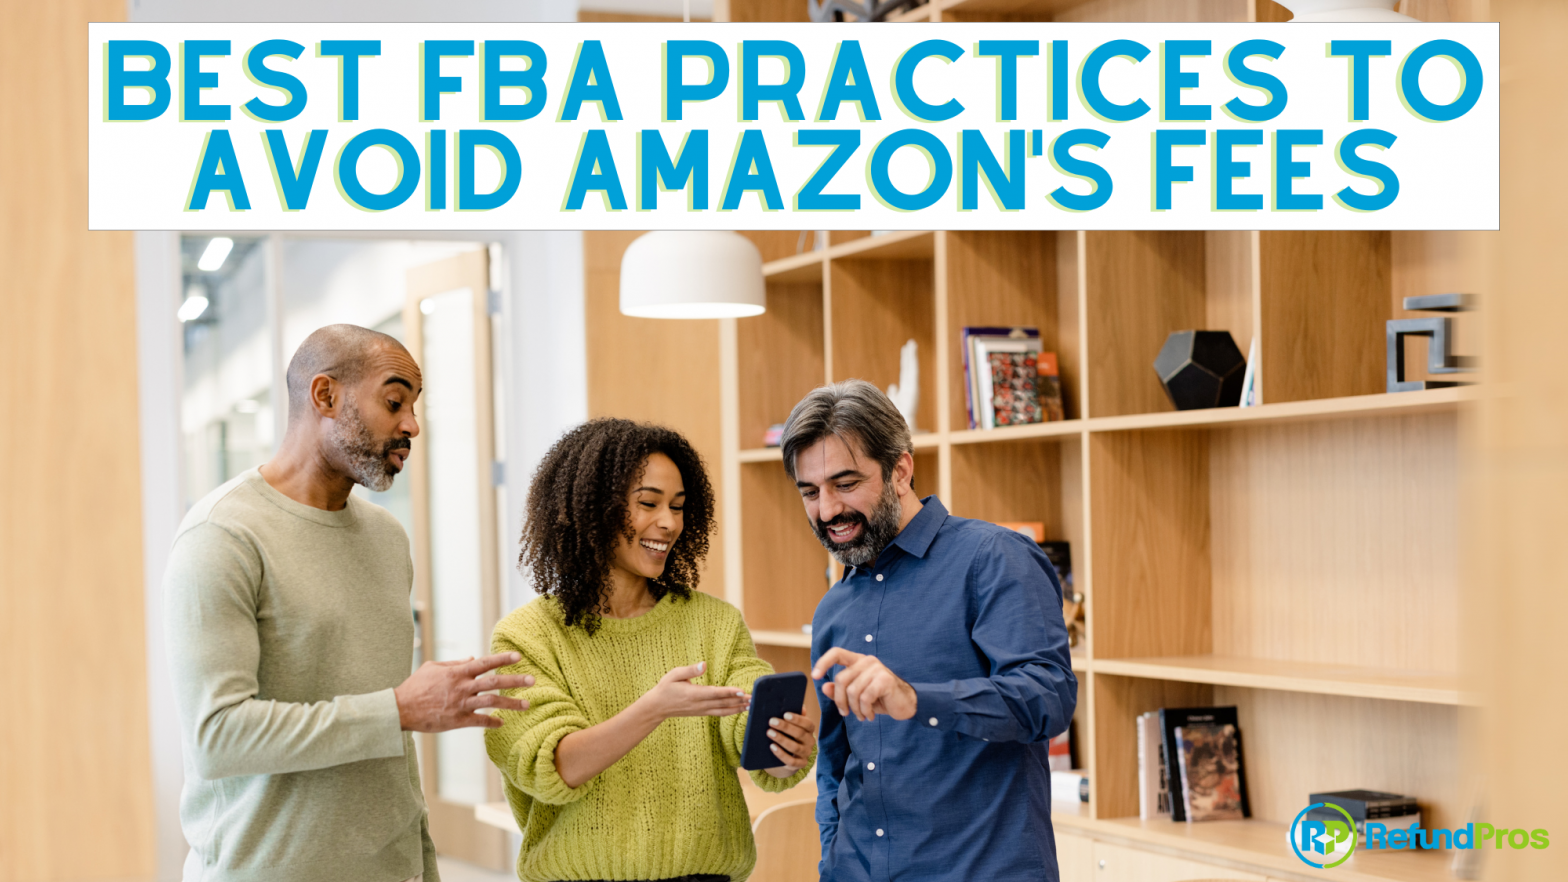 Best FBA Practices to Avoid Amazon's Fees